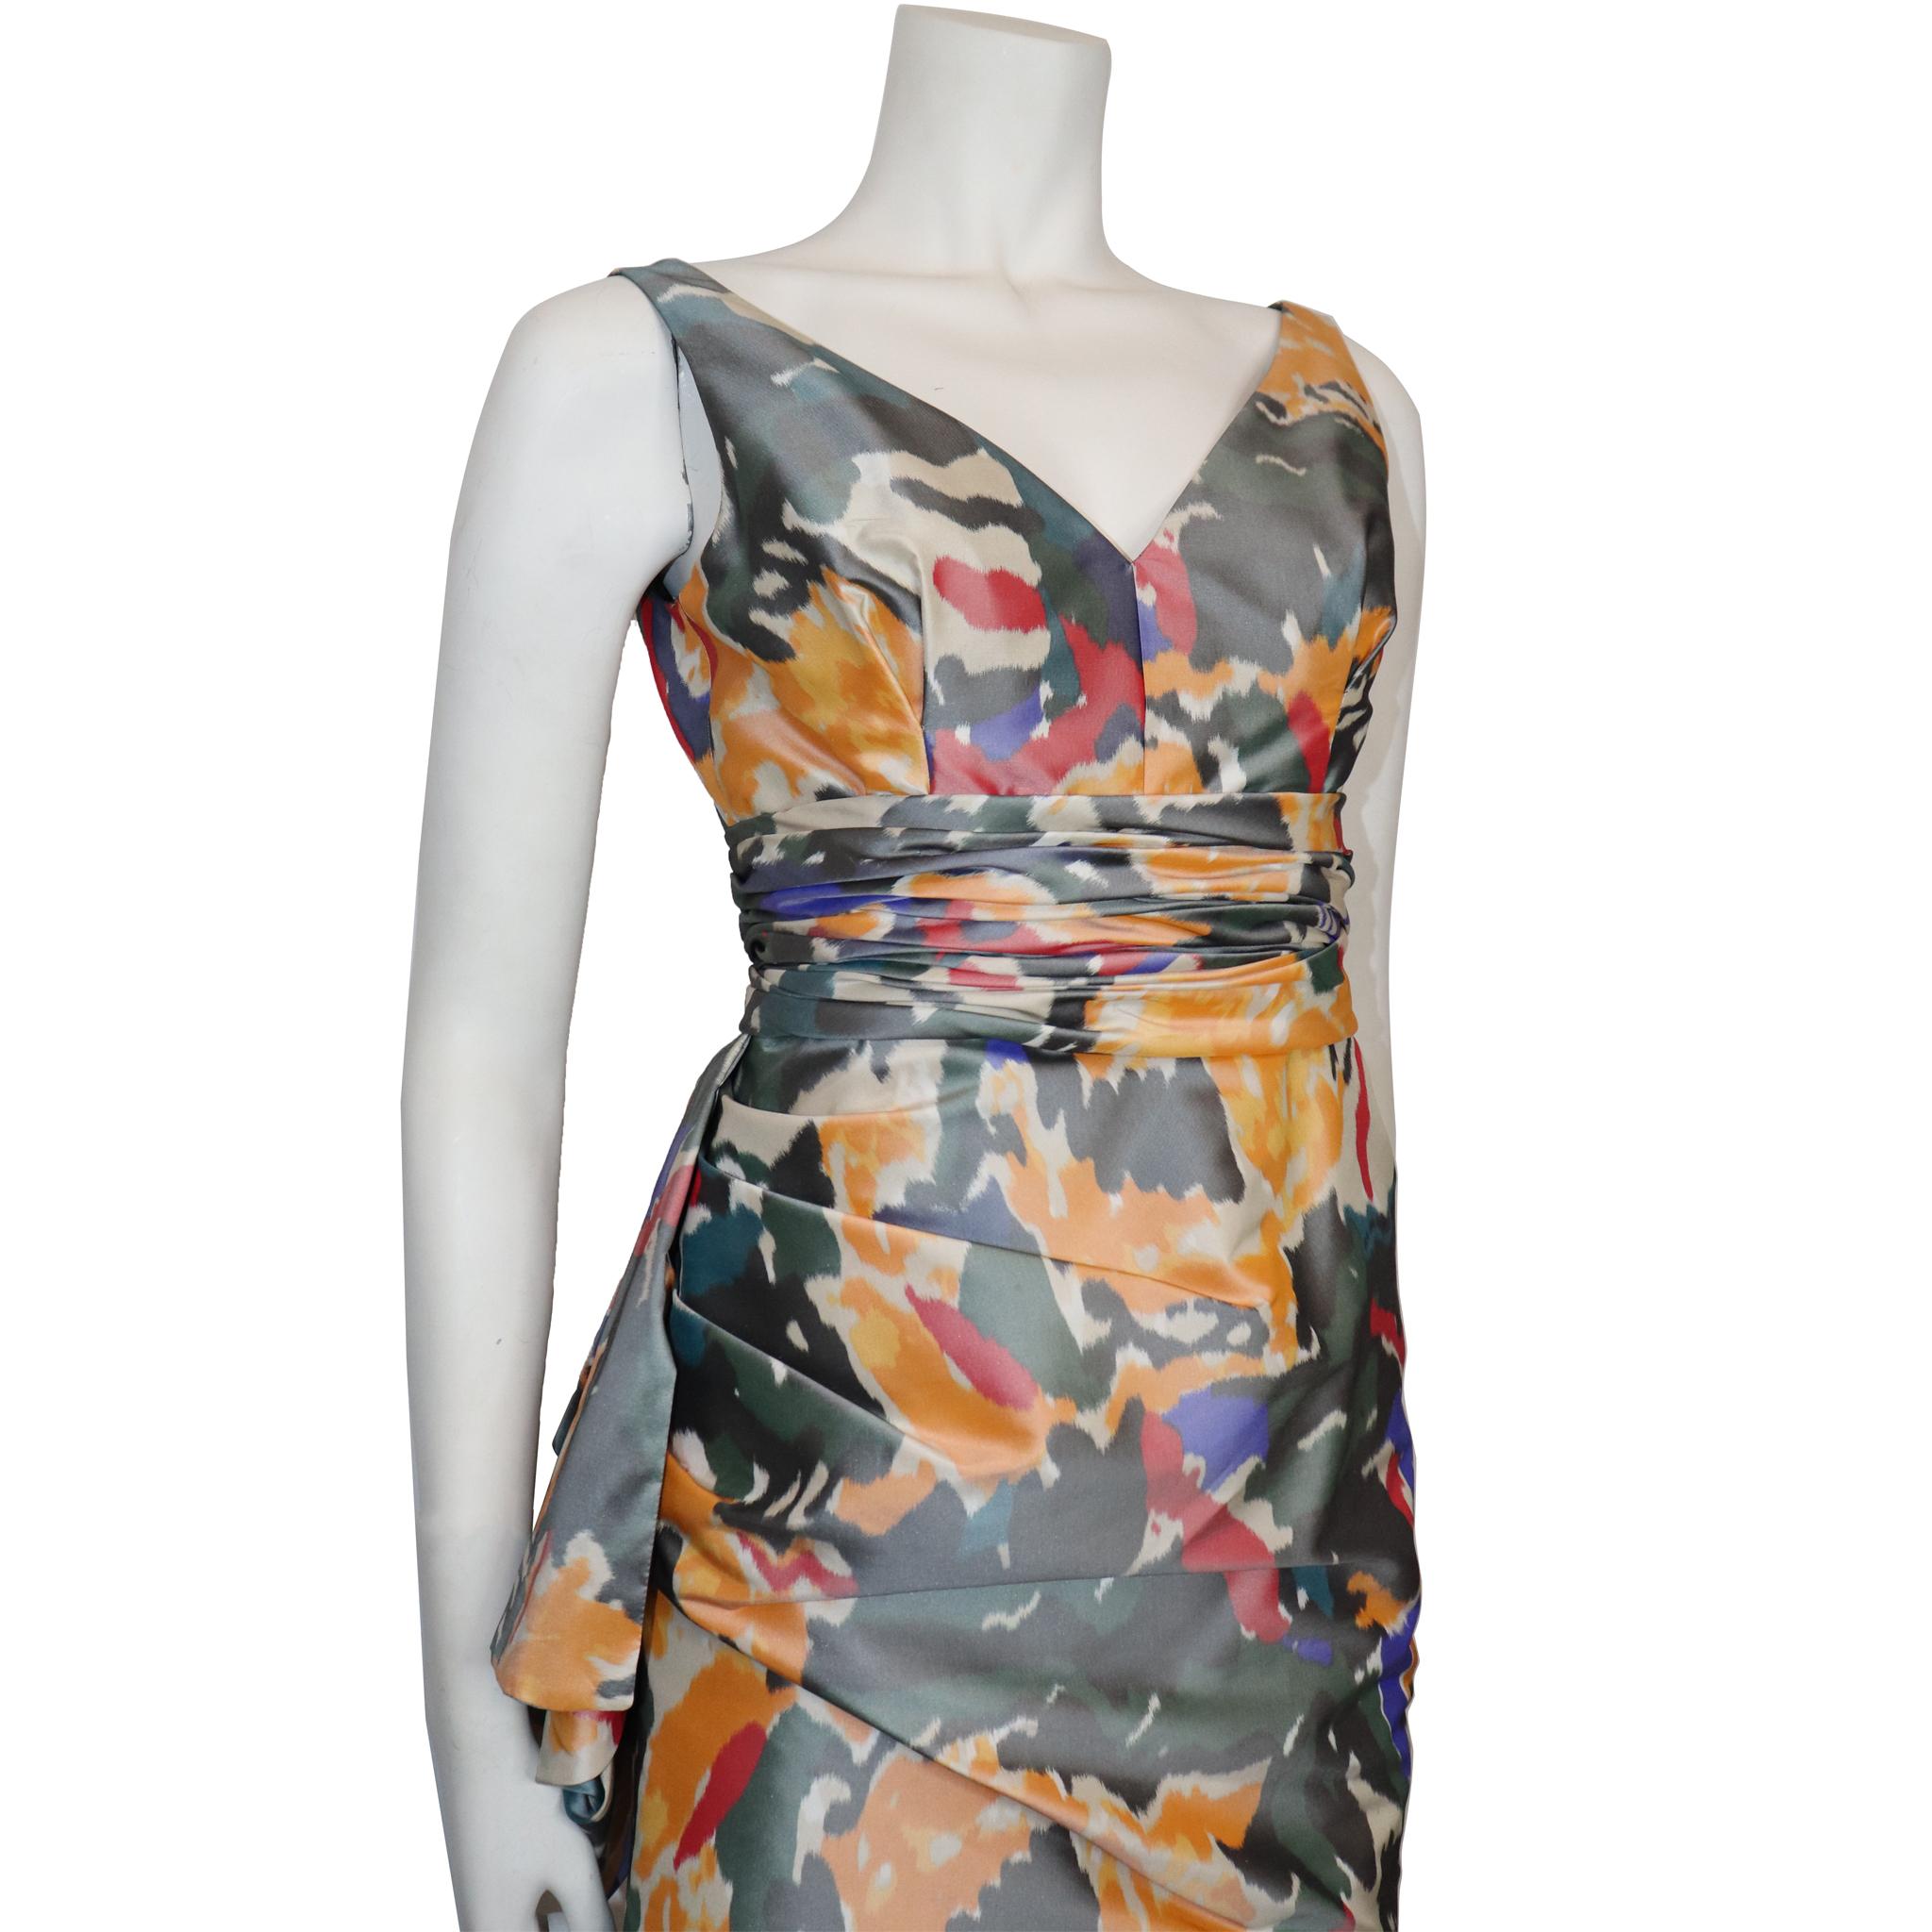 Oscar De La Renta Multicolor Warp Print Gown w/ Gathers Circa 2000s. In excellent condition 

Measurements - 

Size 4 
Gown Length: 61 Inches